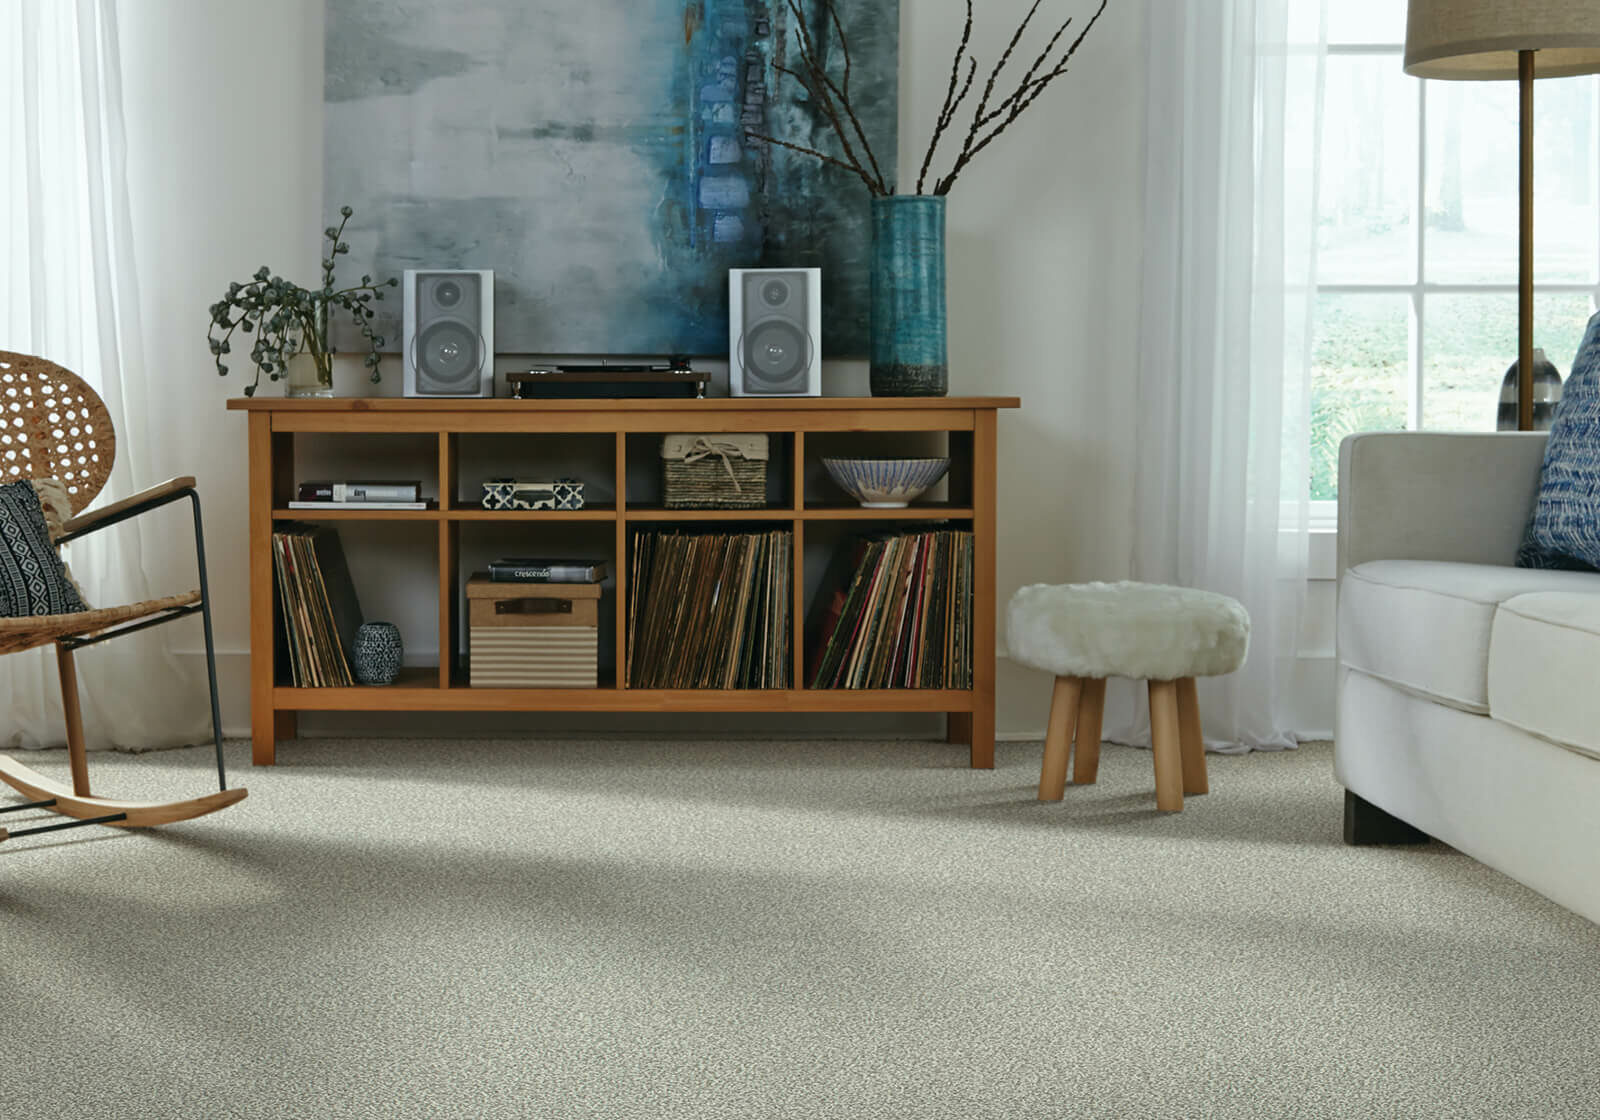 Carpet in a living room | Carpetland USA